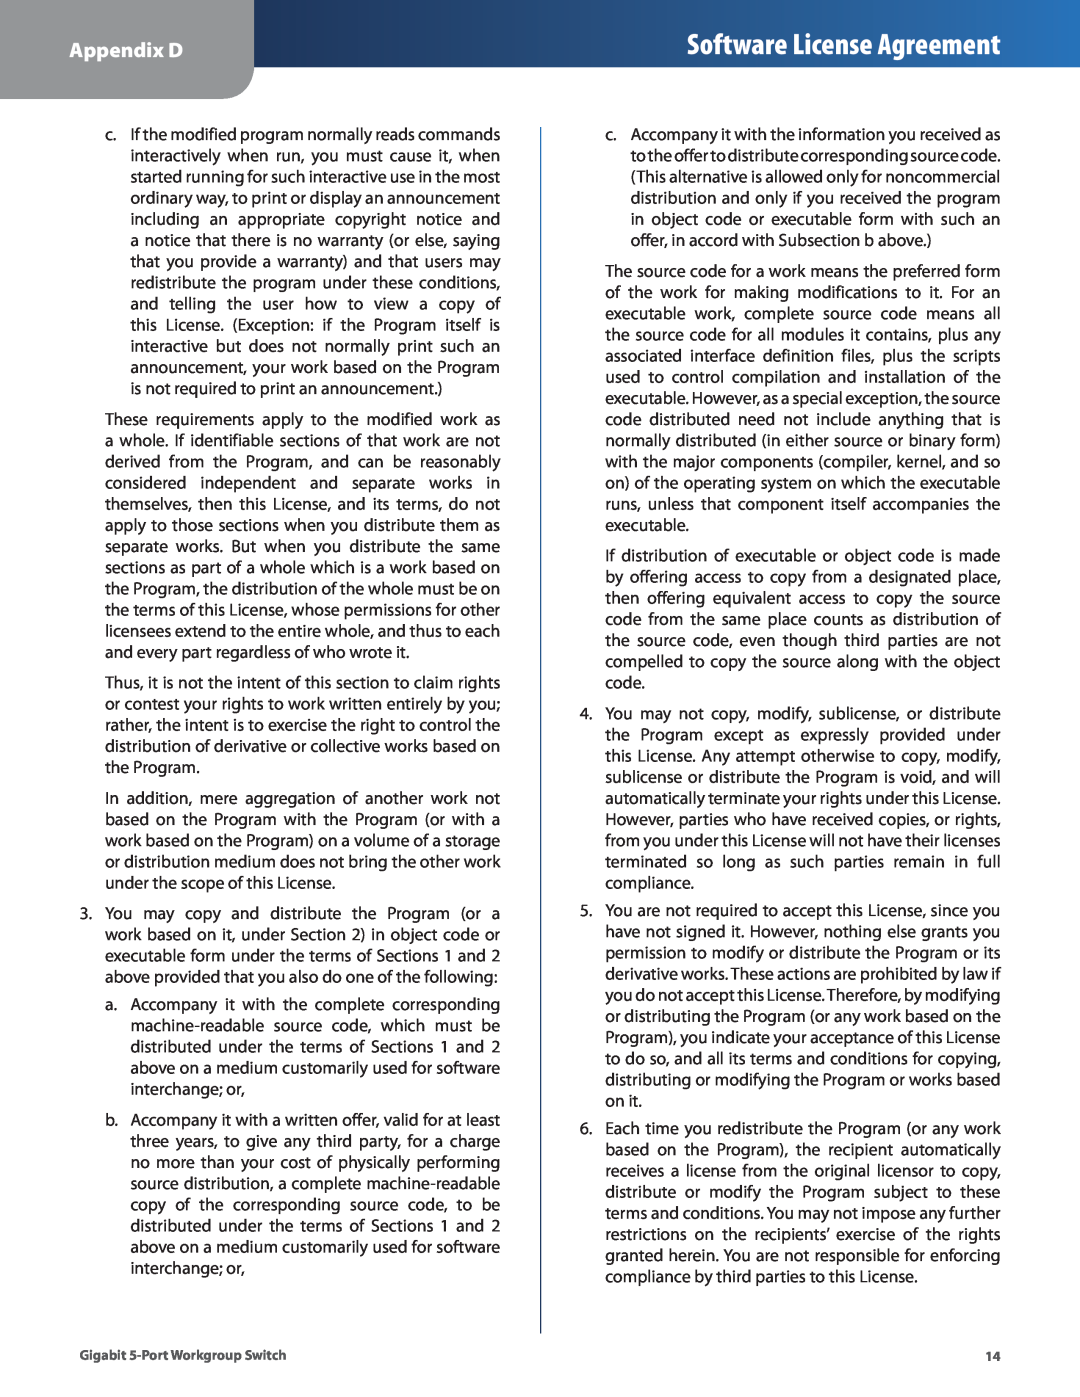 Cisco Systems EG005W manual Software License Agreement, Appendix D 